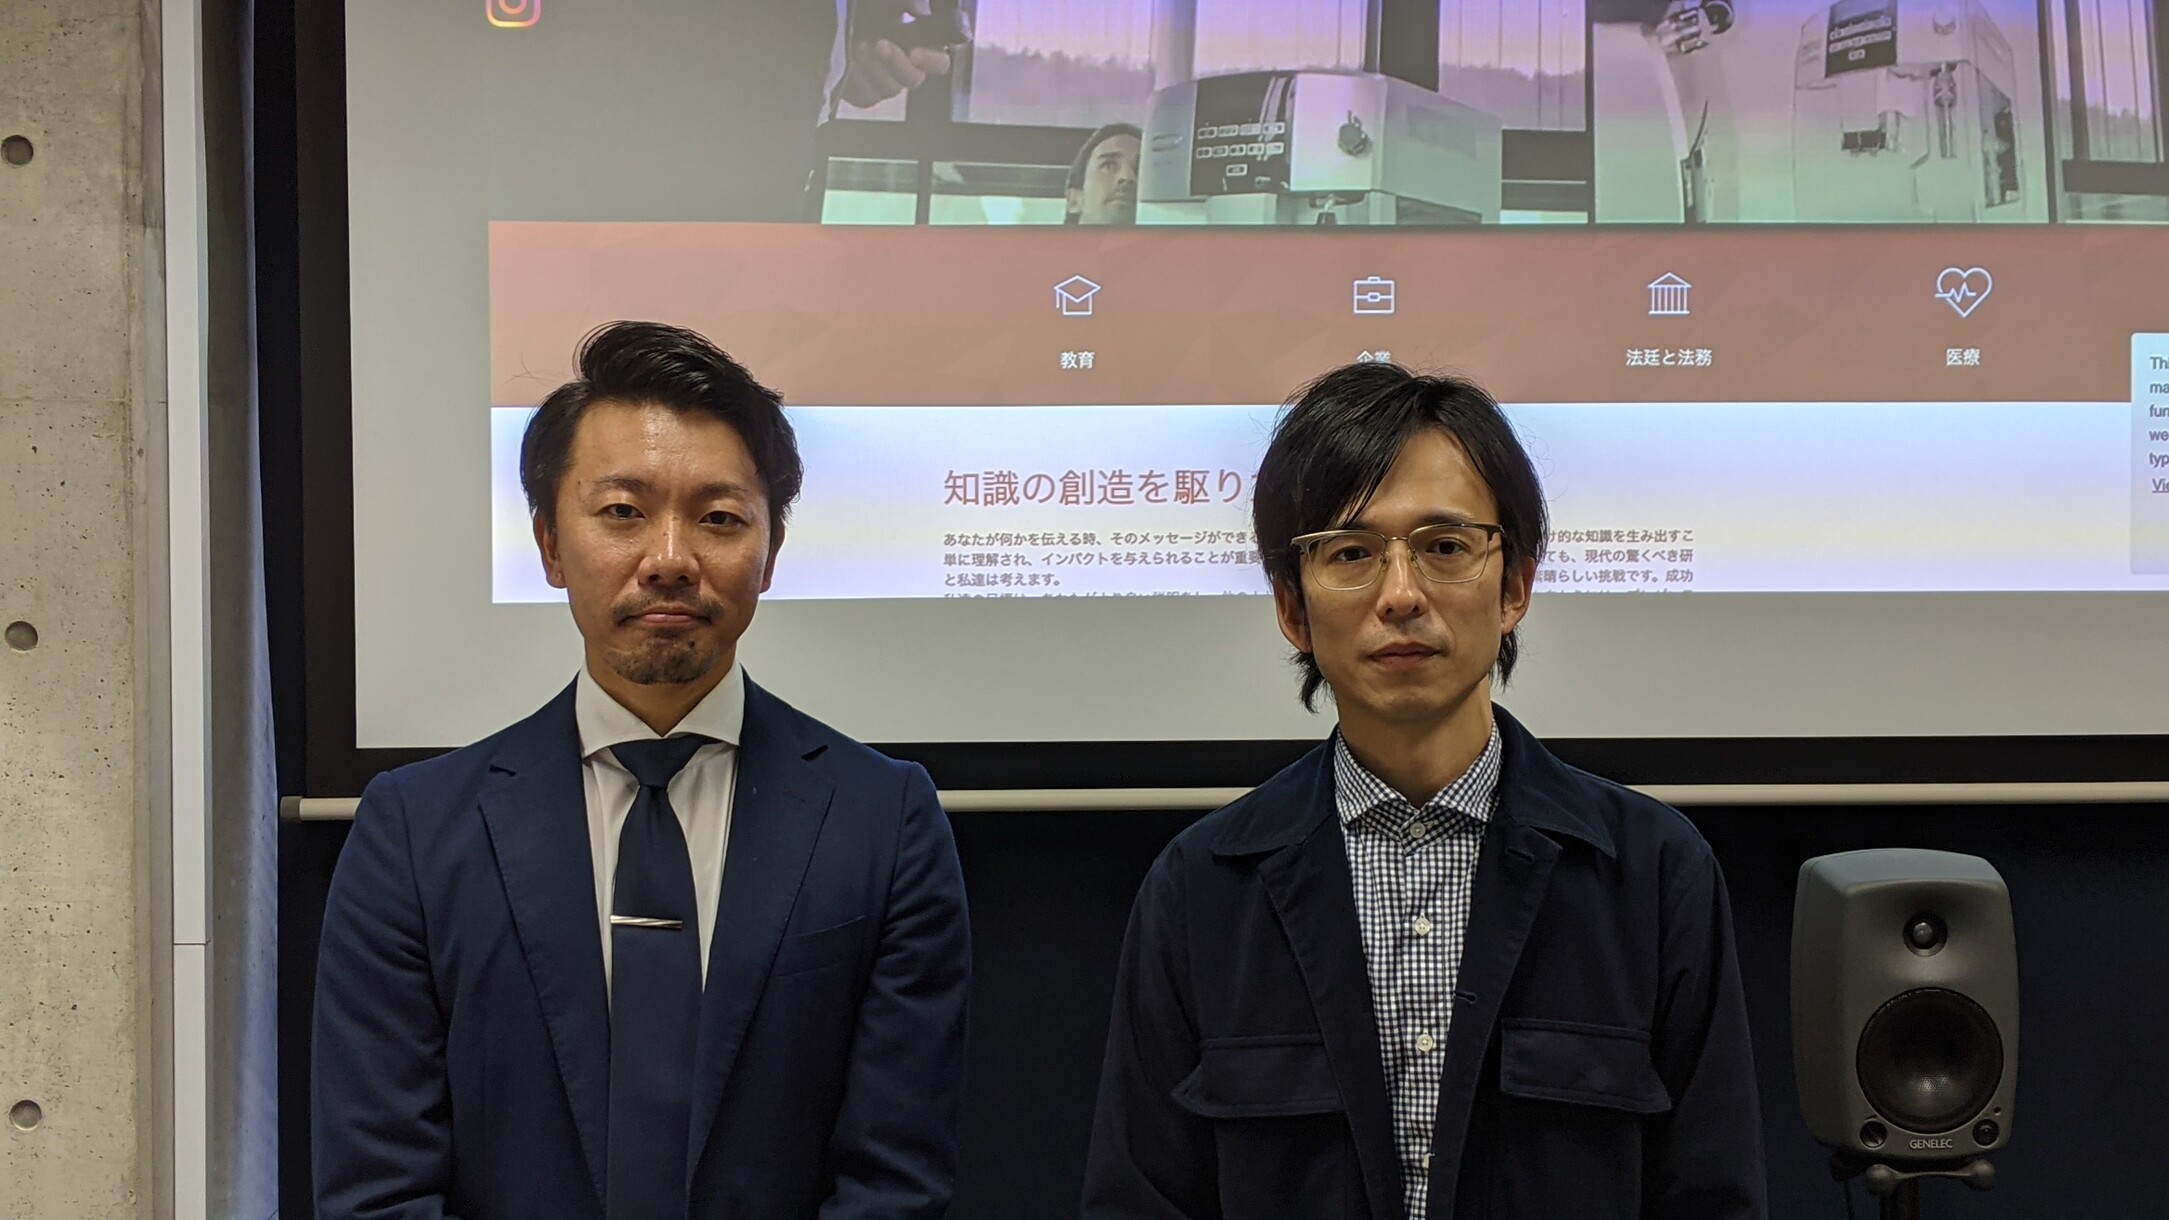 Mr. Murata from Kyoiku Sangyo (left) pictured with Mr. Suzuki from NUAS.